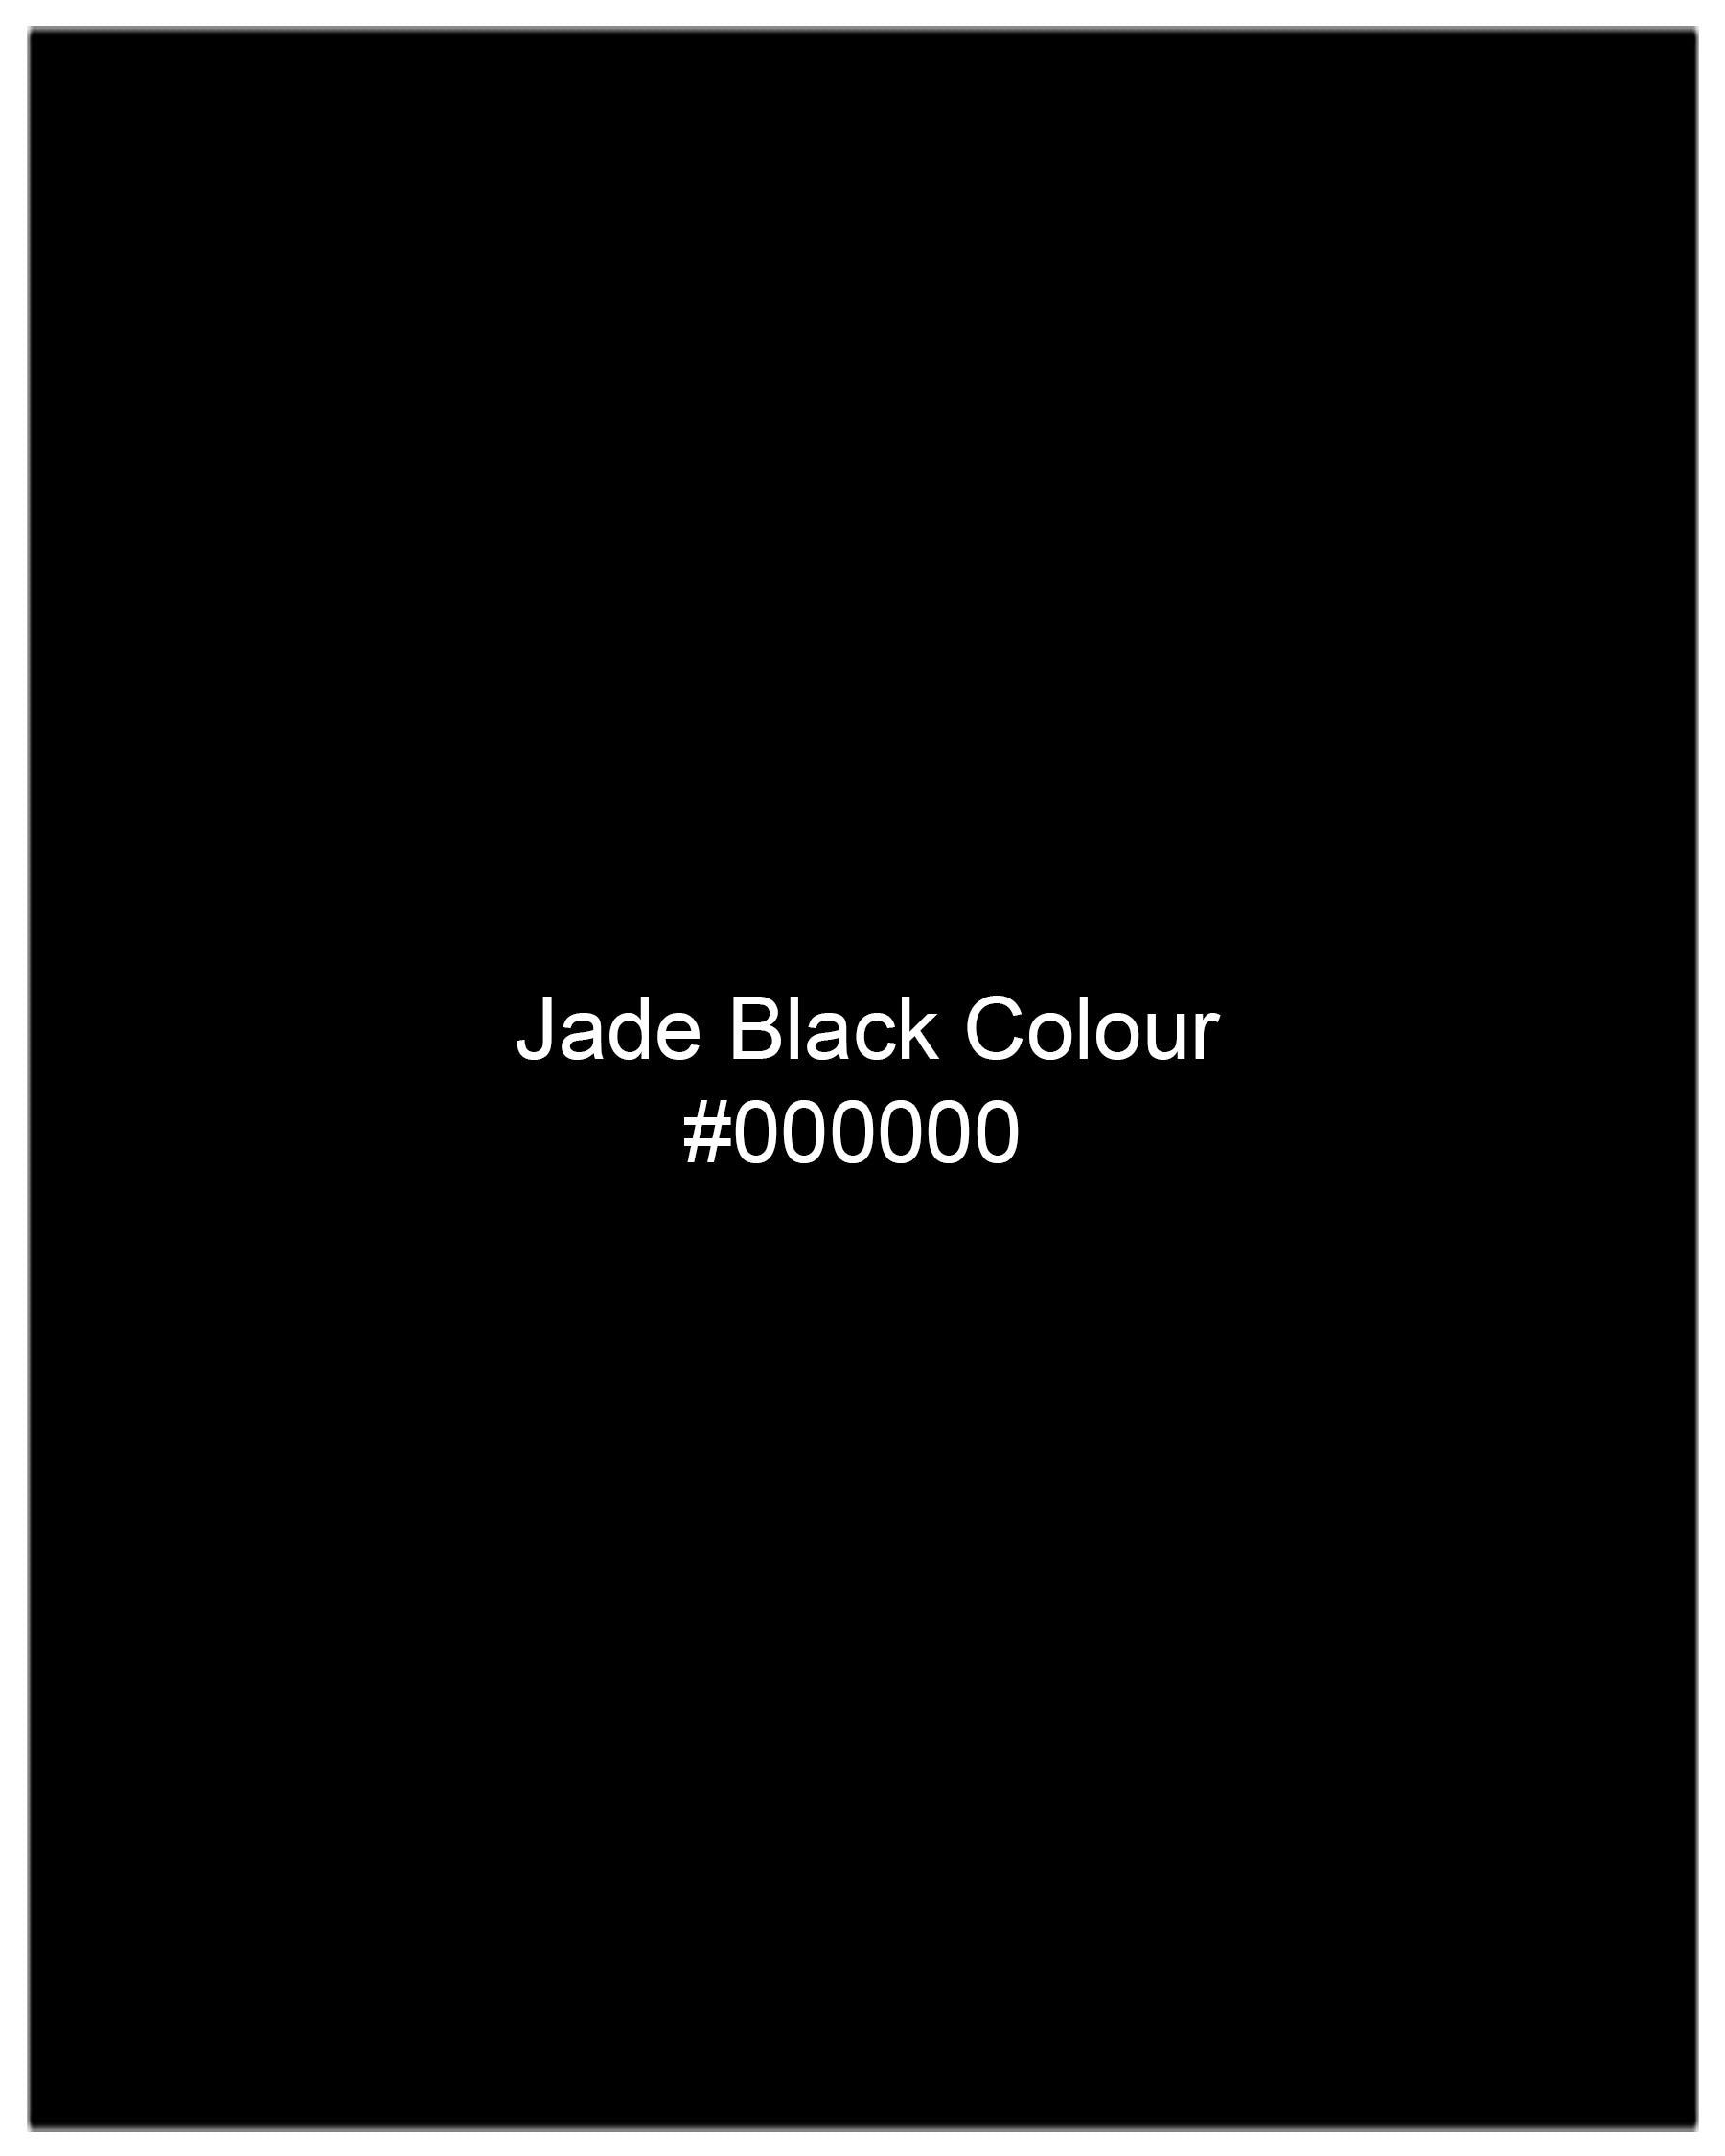 Jade Black diamond textured Double Breasted Suit